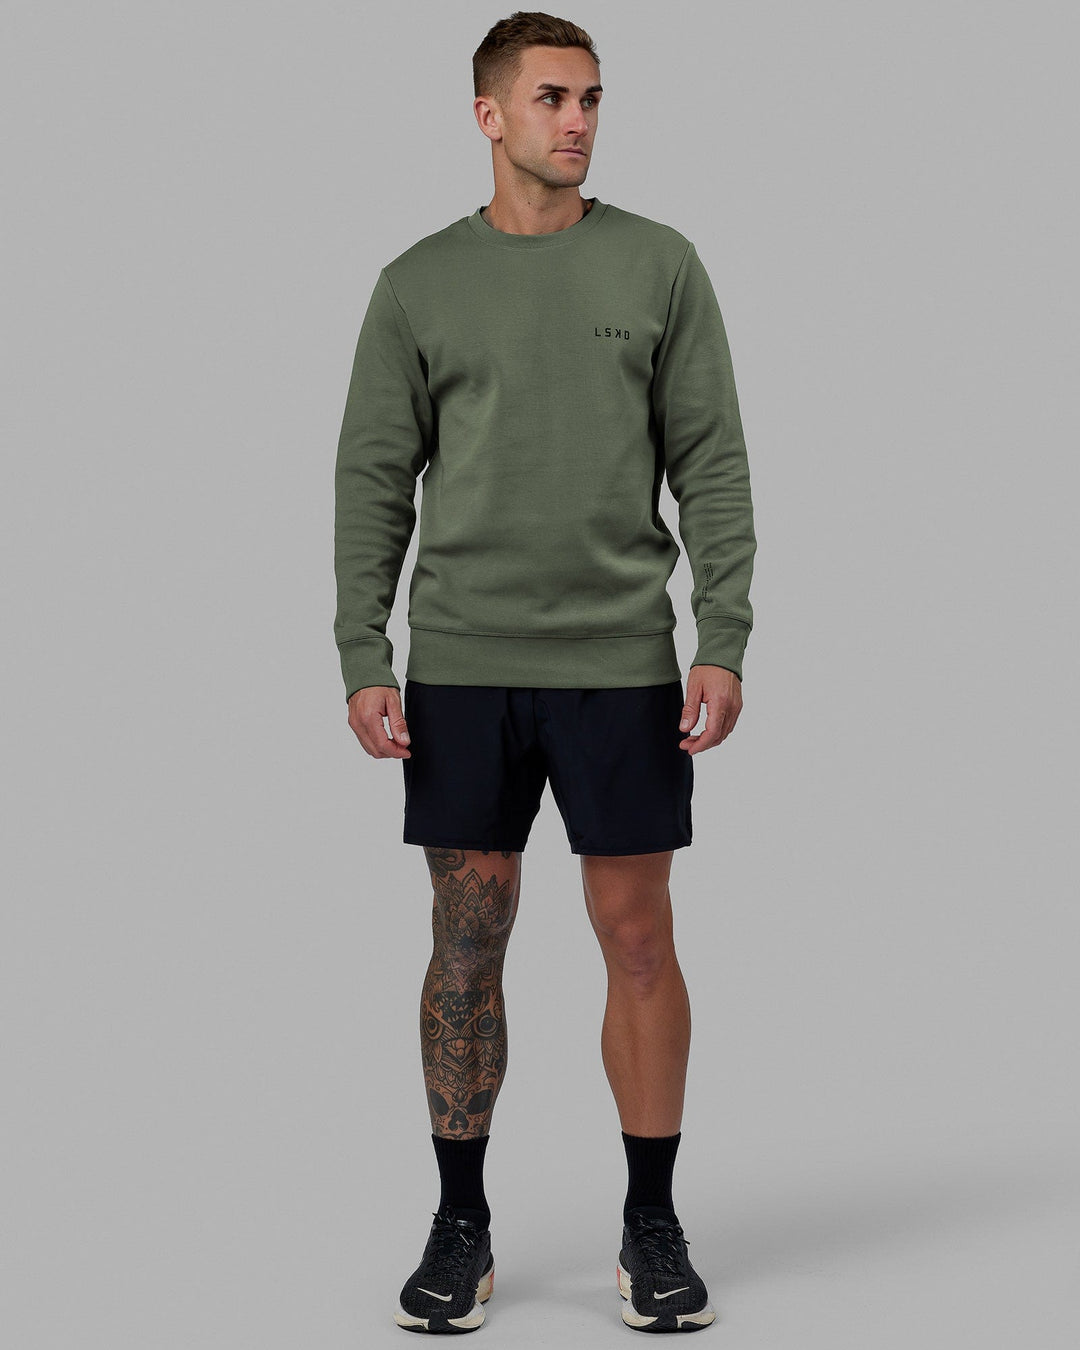 Man wearing Athlete ForgedFleece Sweater - Dark Forest